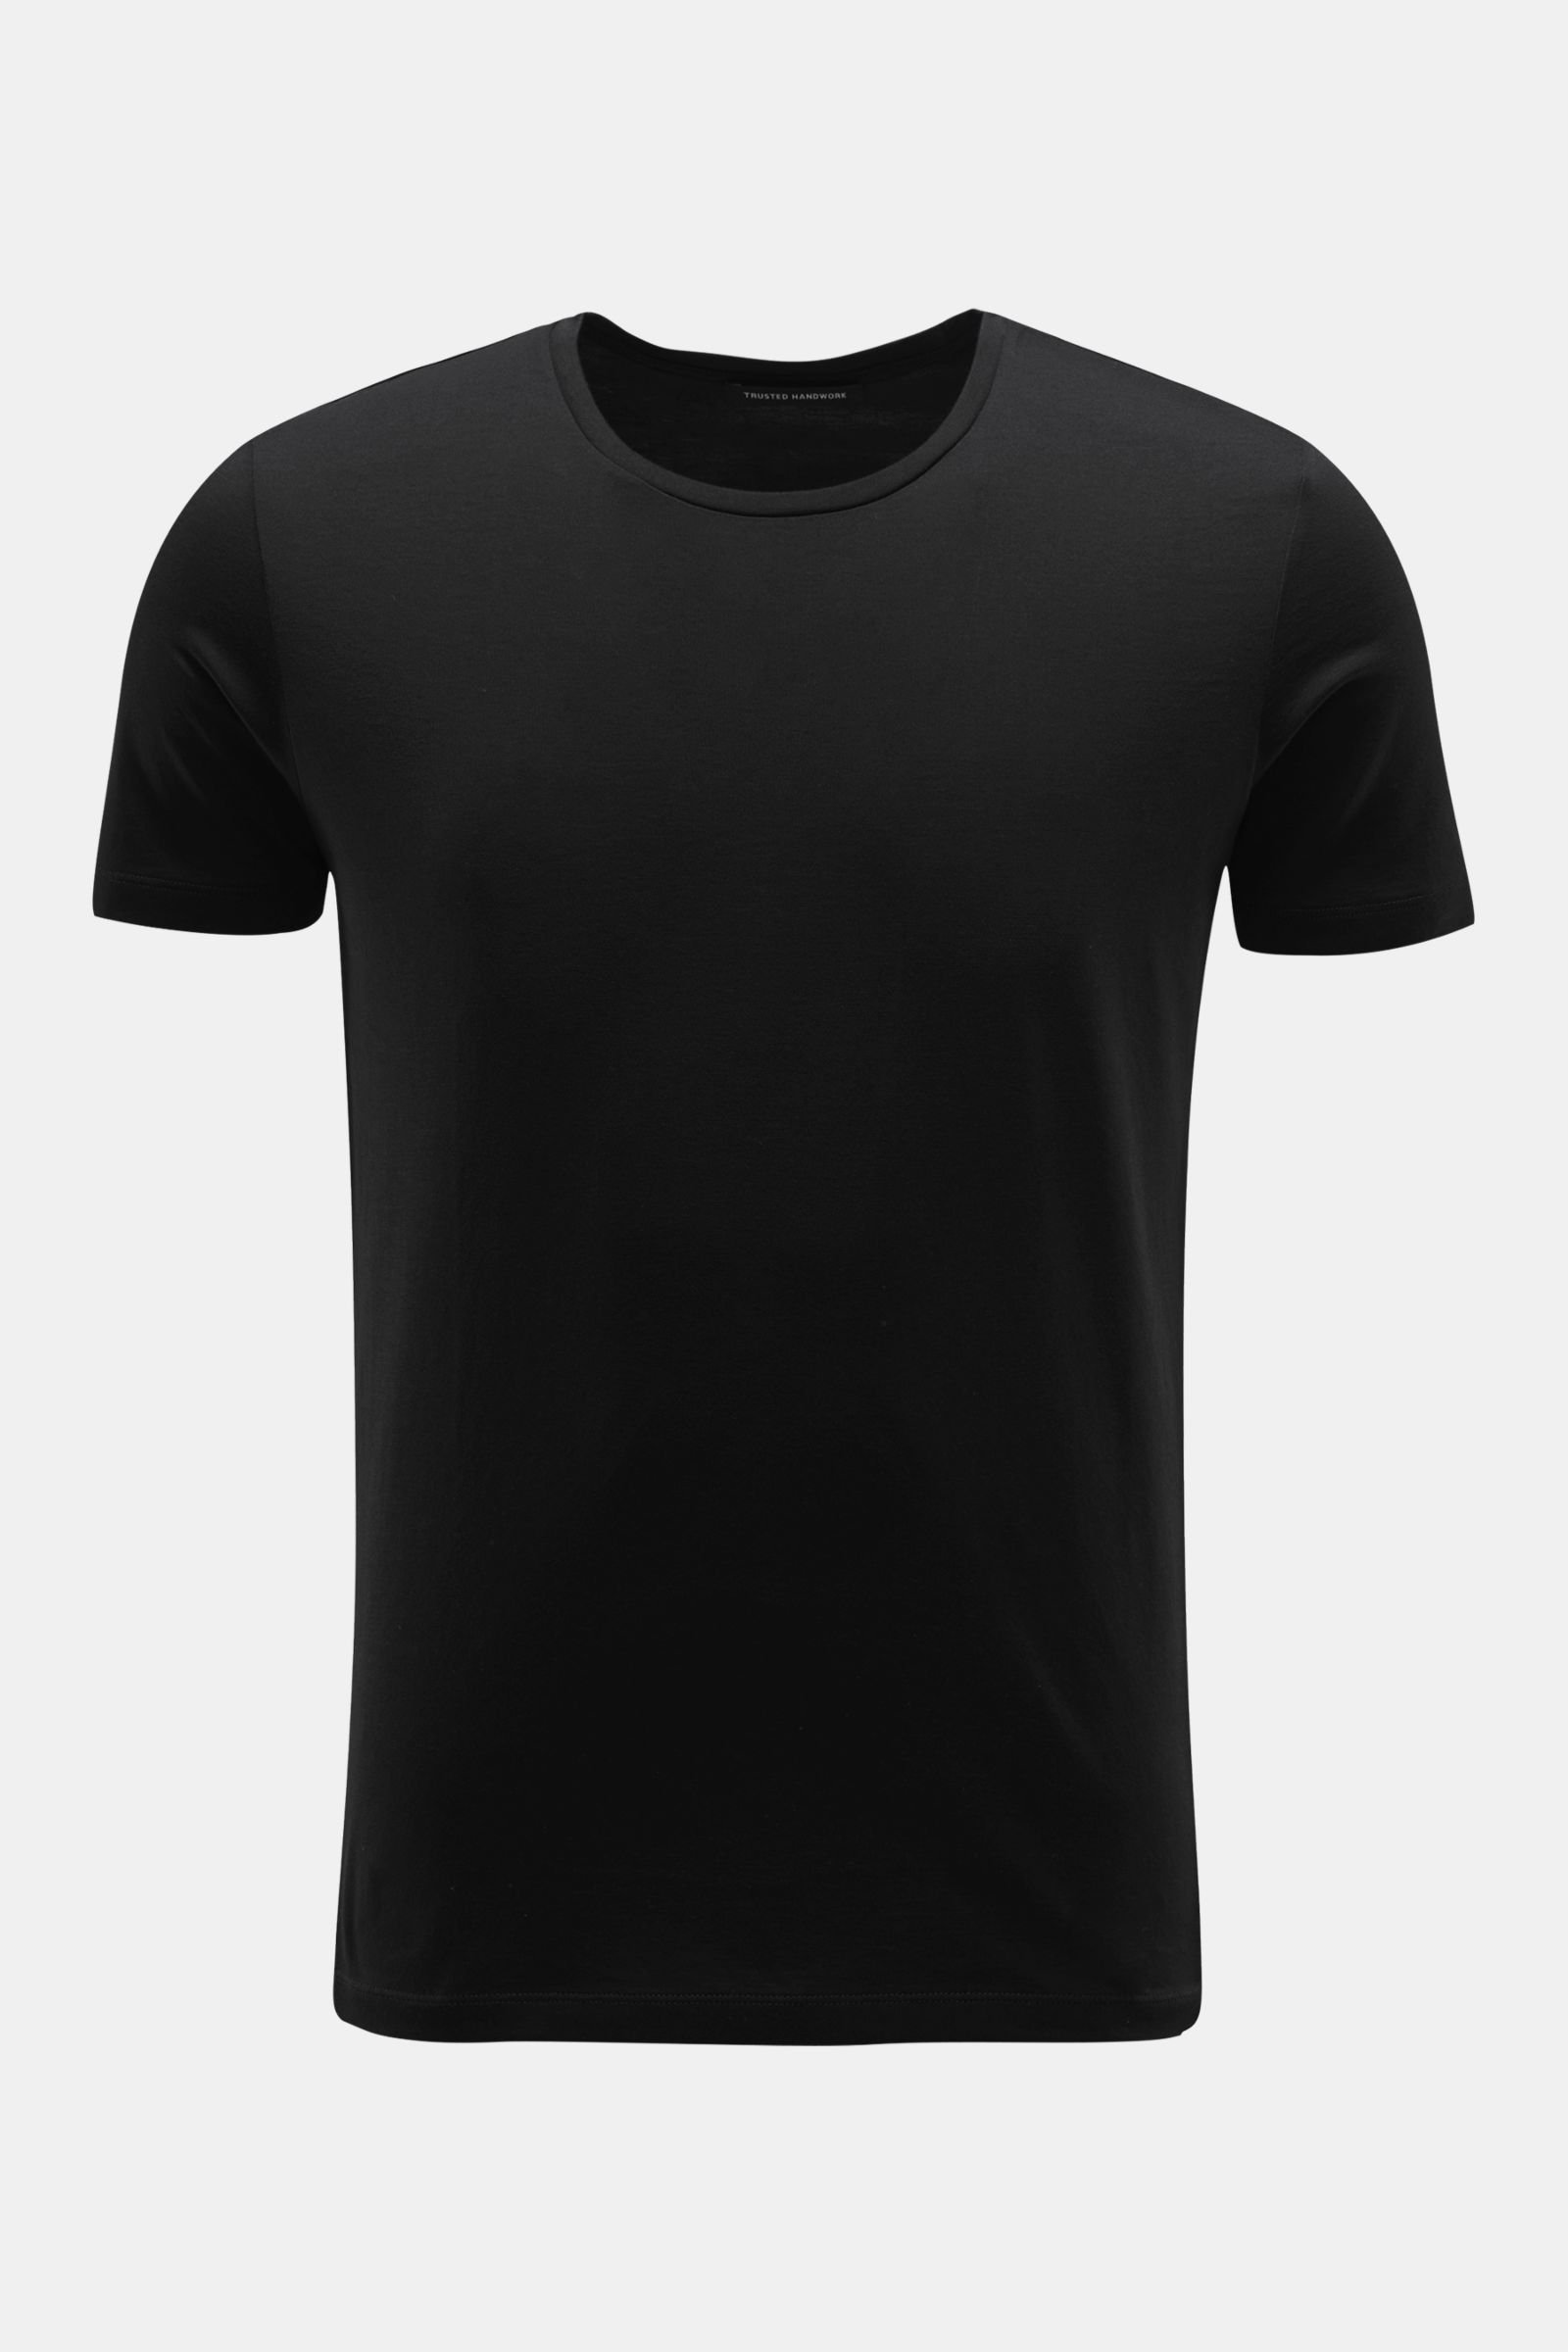 TRUSTED HANDWORK crew neck T-shirt black | BRAUN Hamburg